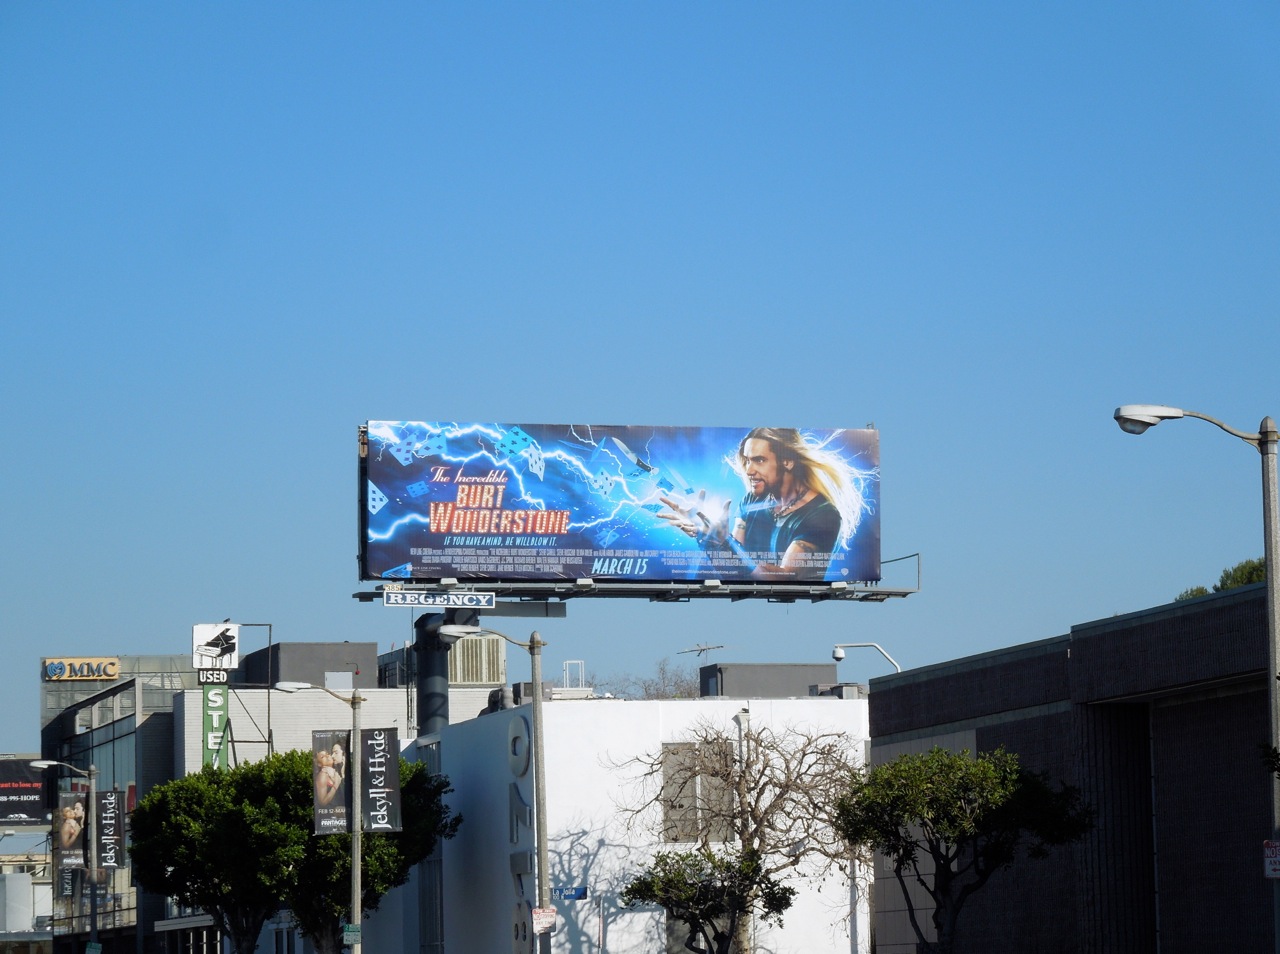 Daily Billboard: The Incredible Burt Wonderstone movie billboards... Advertising for ...1280 x 954